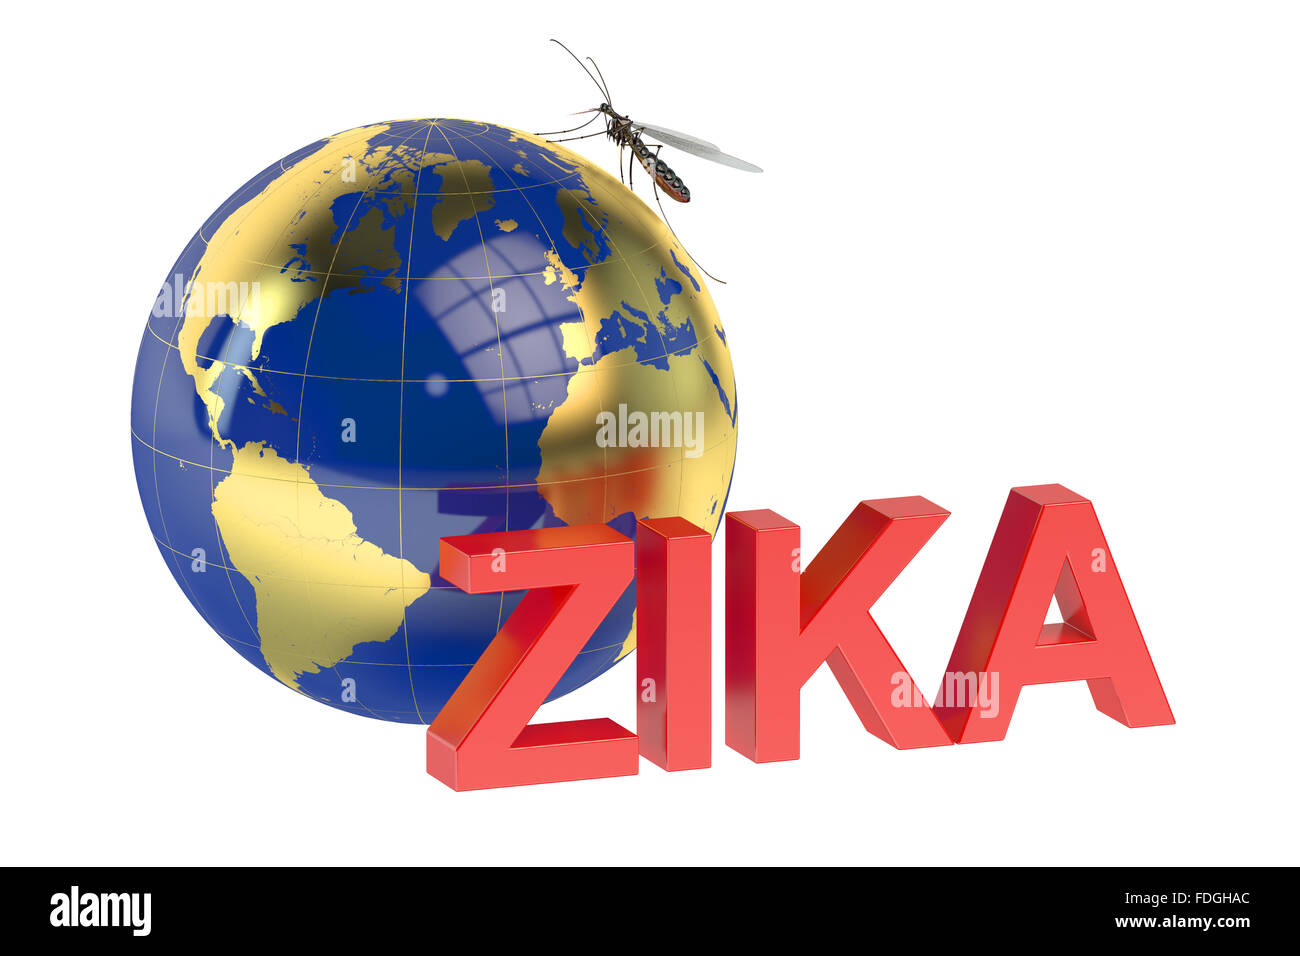 Zika virus concept  isolated on green background Stock Photo